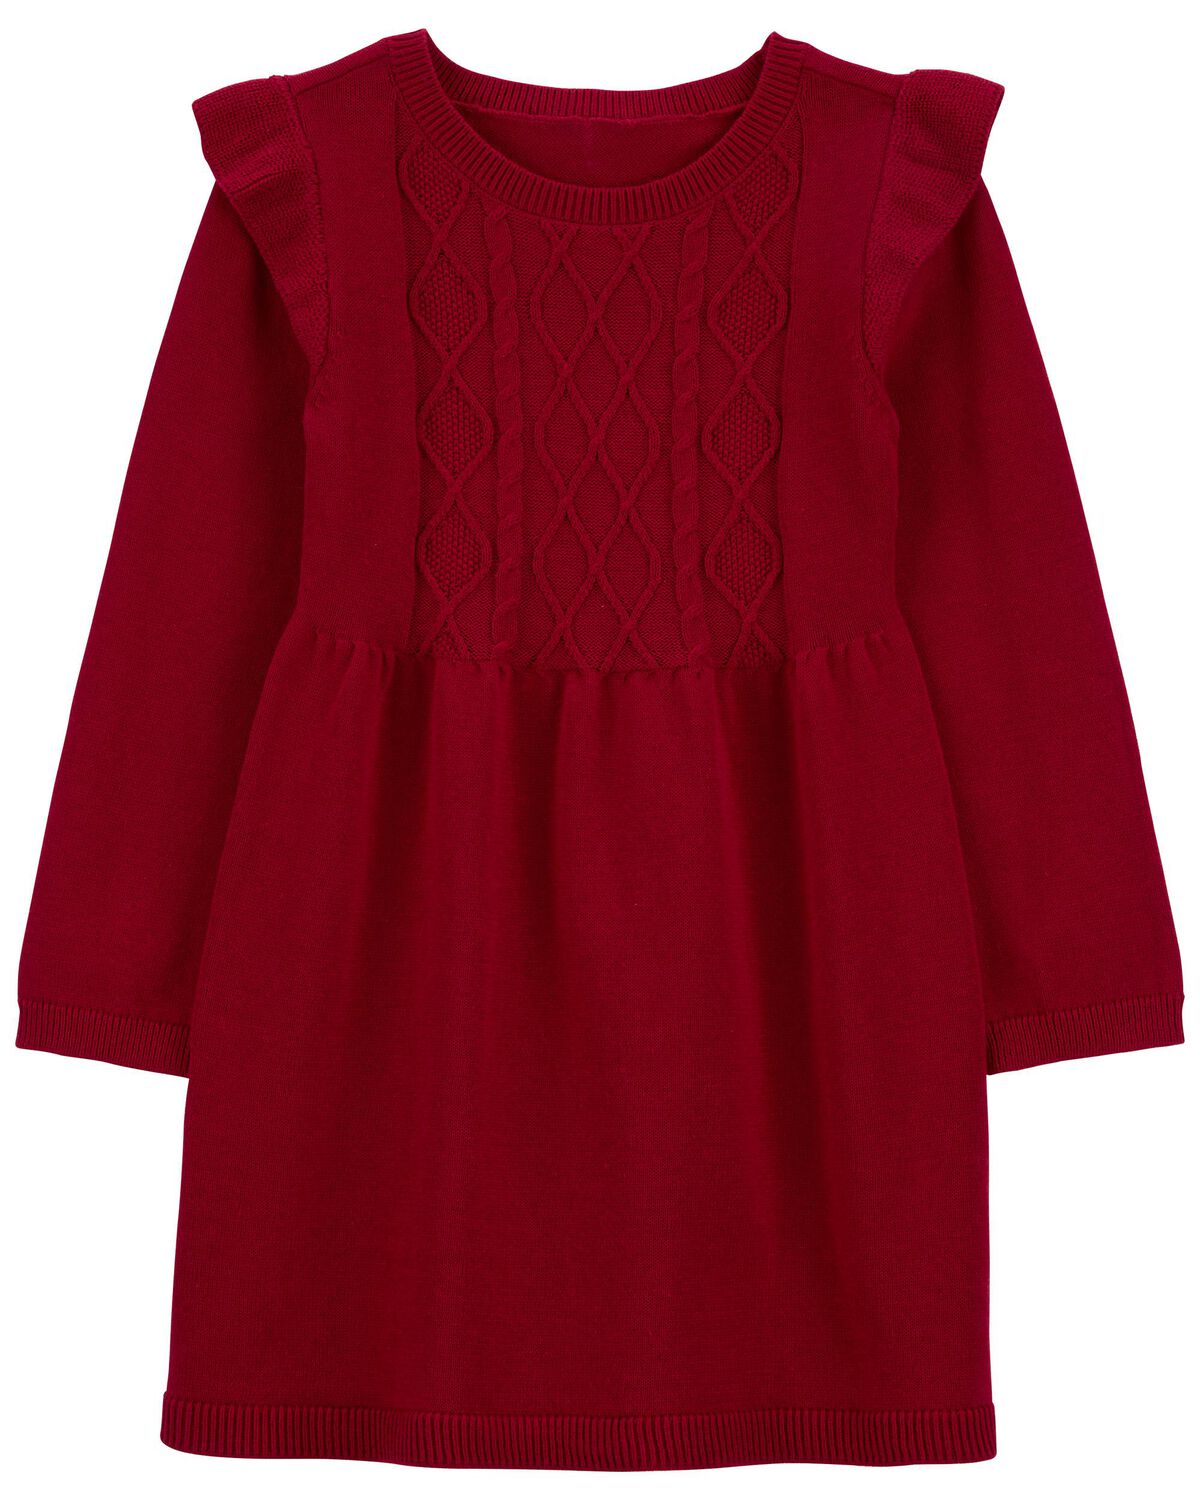 Red Toddler Sweater Dress | carters.com